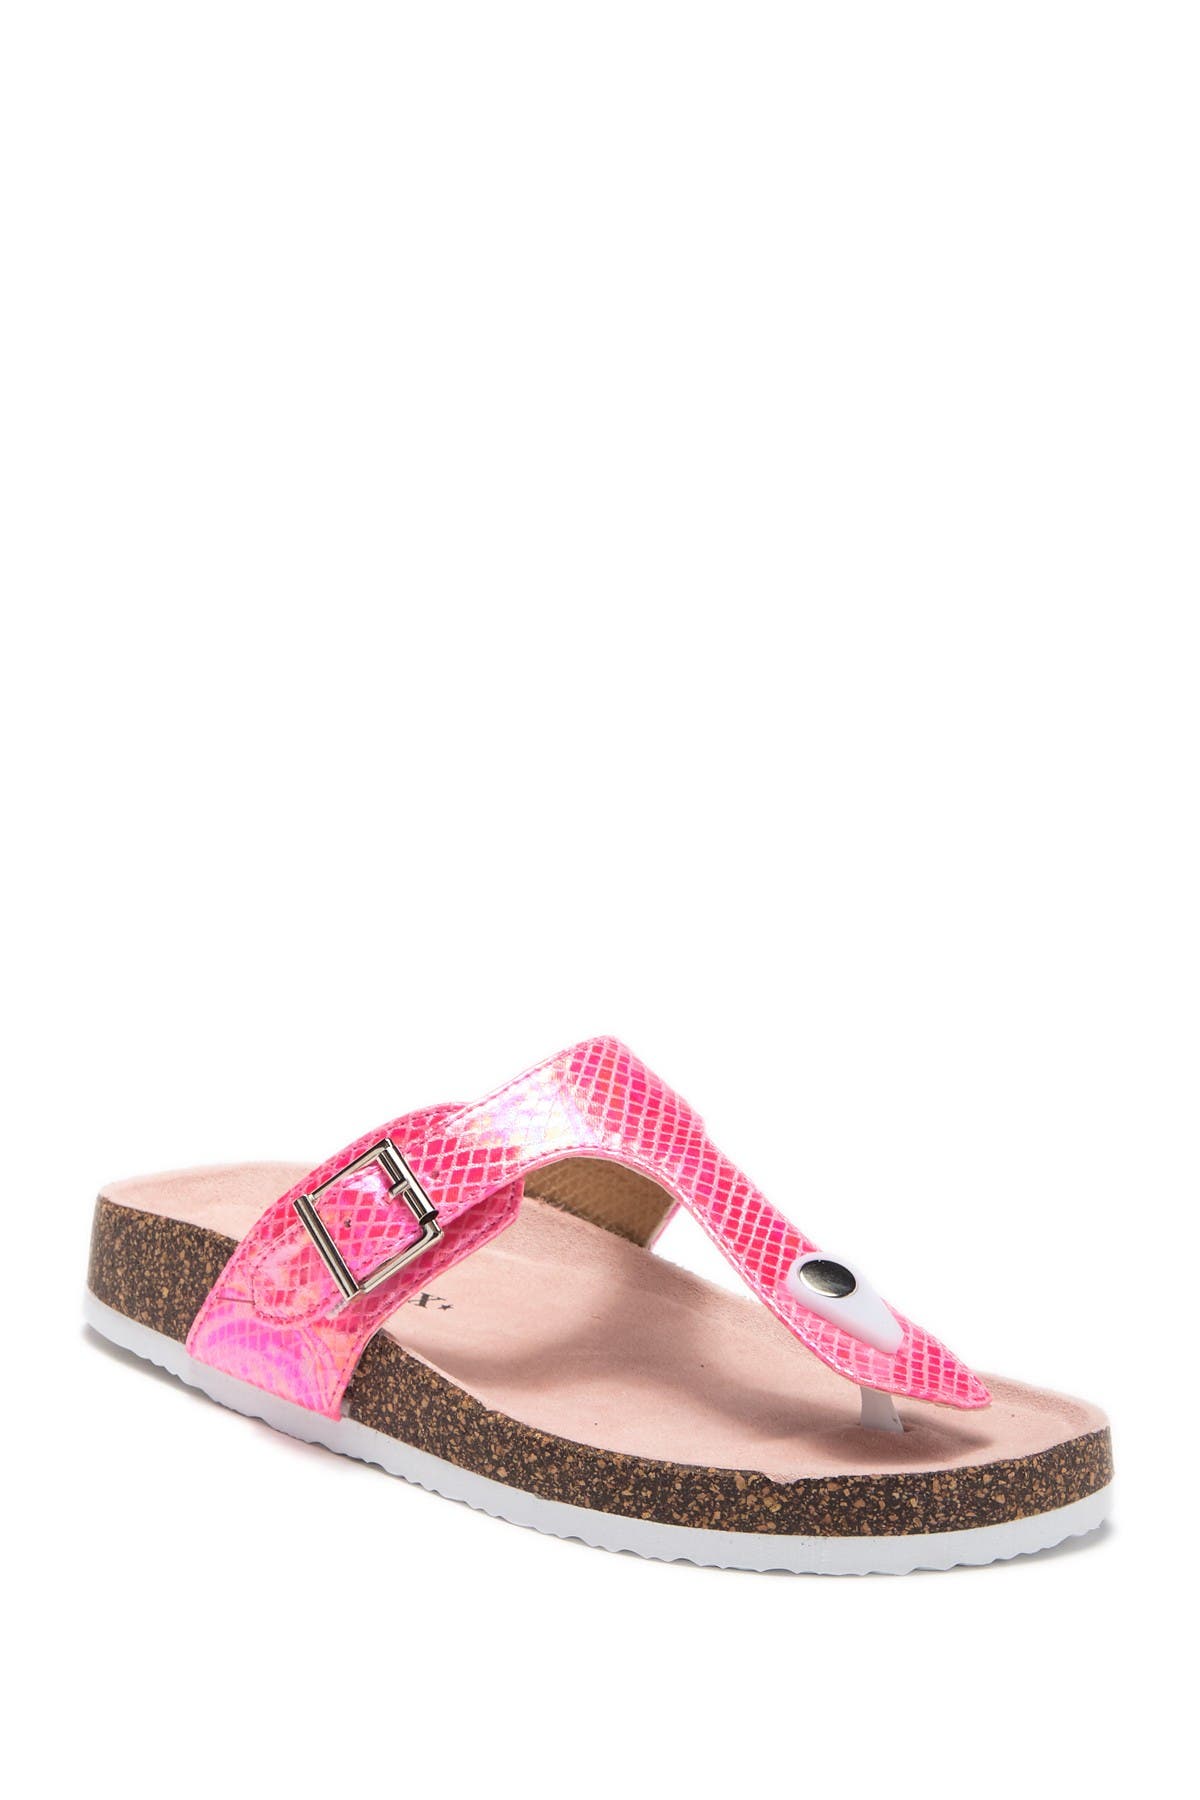 Sprox Kids' Frisco Reptile Embossed Sandal In Pink